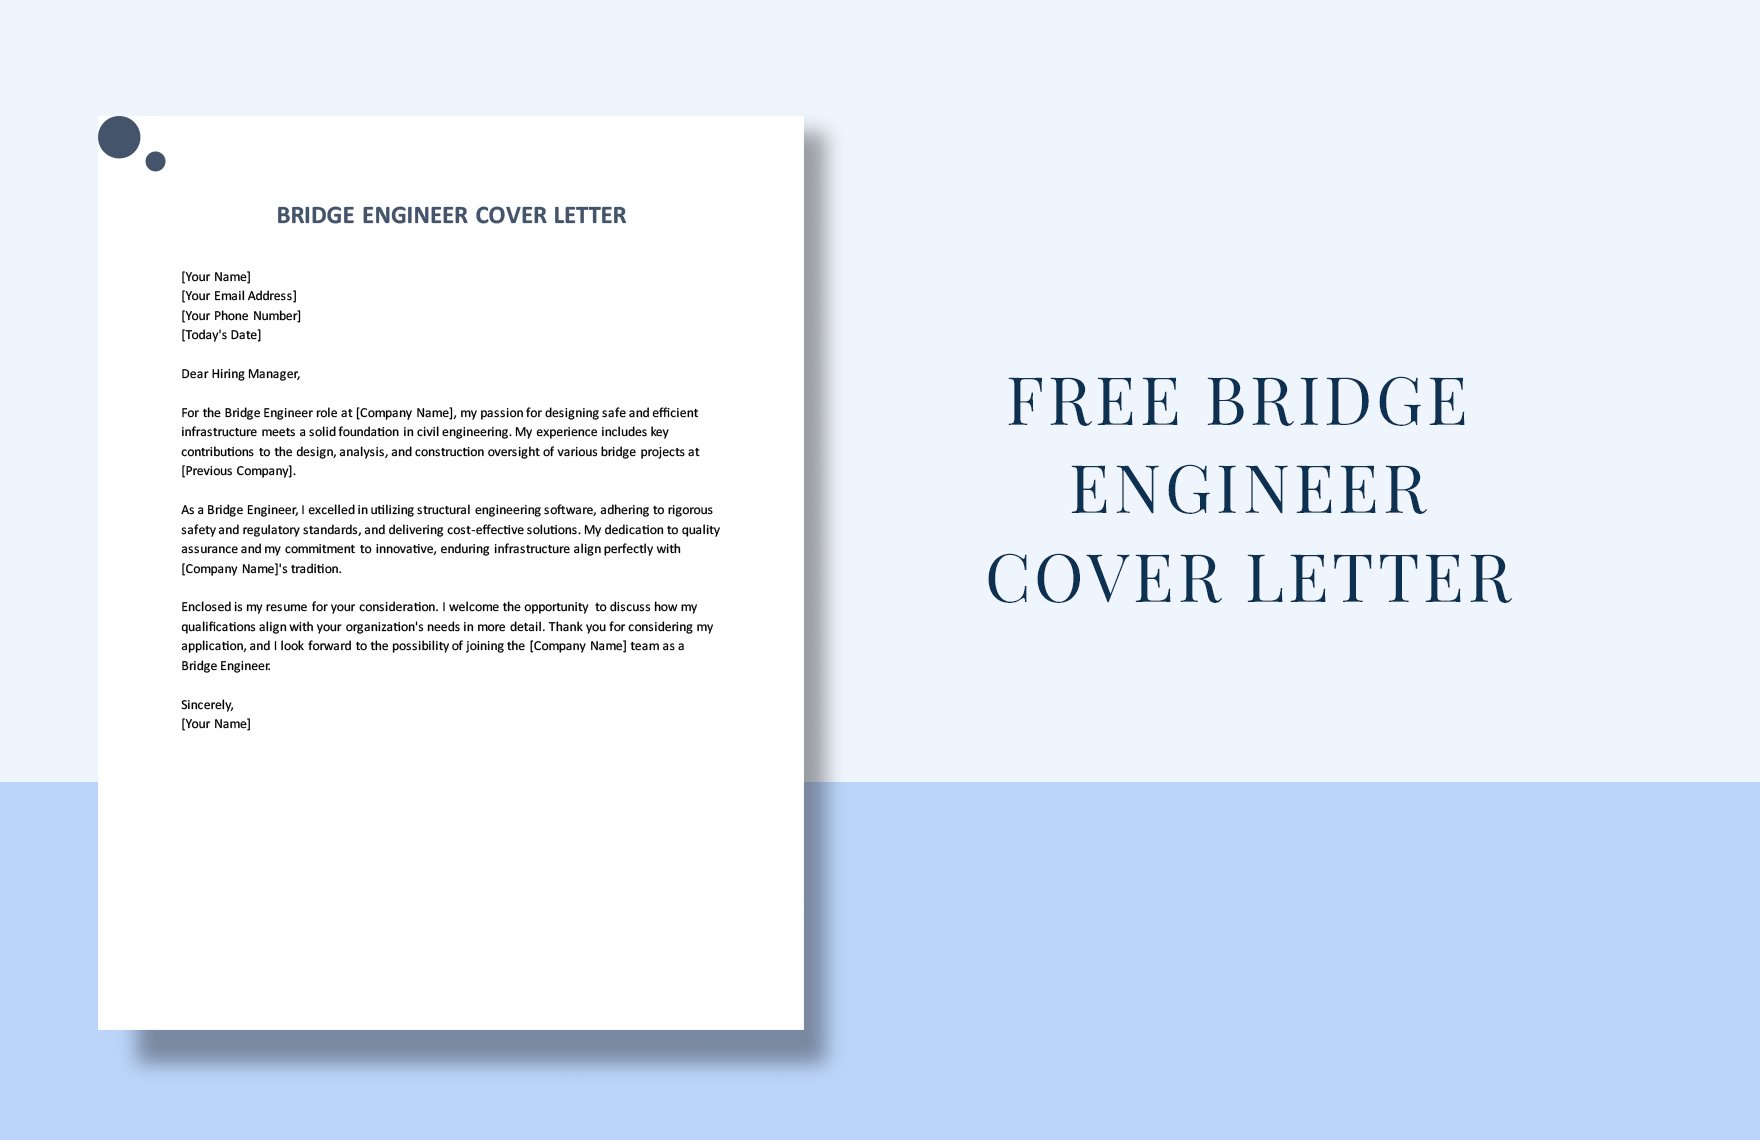 Bridge Engineer Cover Letter in Word, Google Docs, PDF